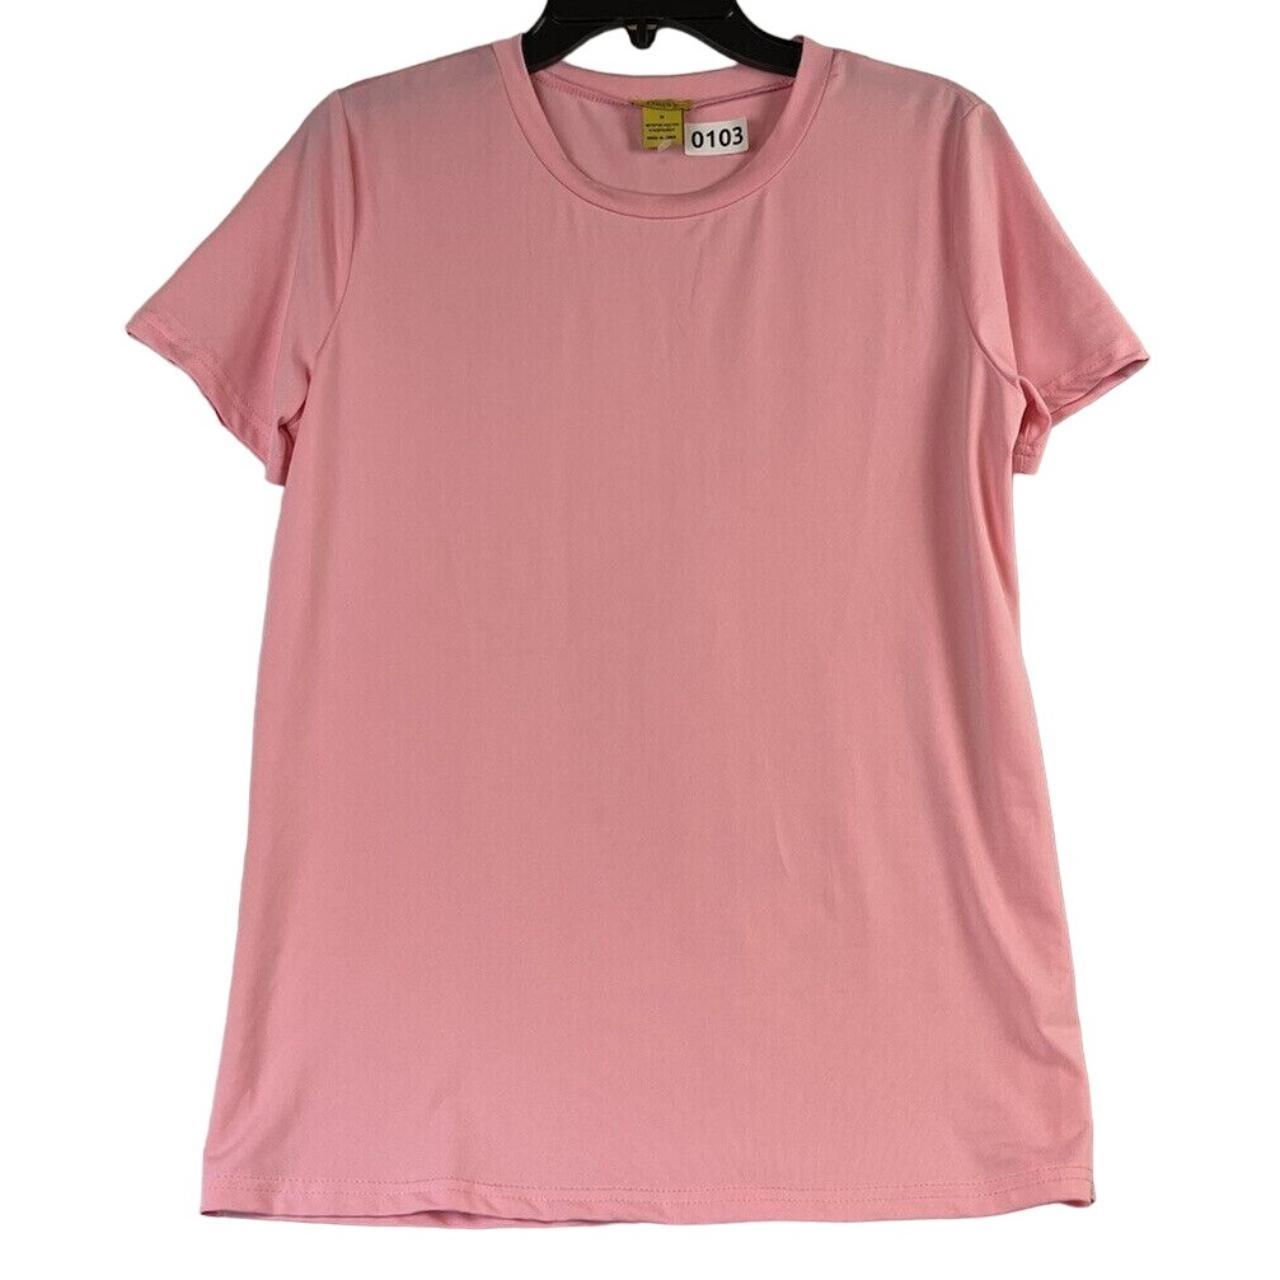 Daisy's women's short-sleeve t-shirt in pink is a... - Depop